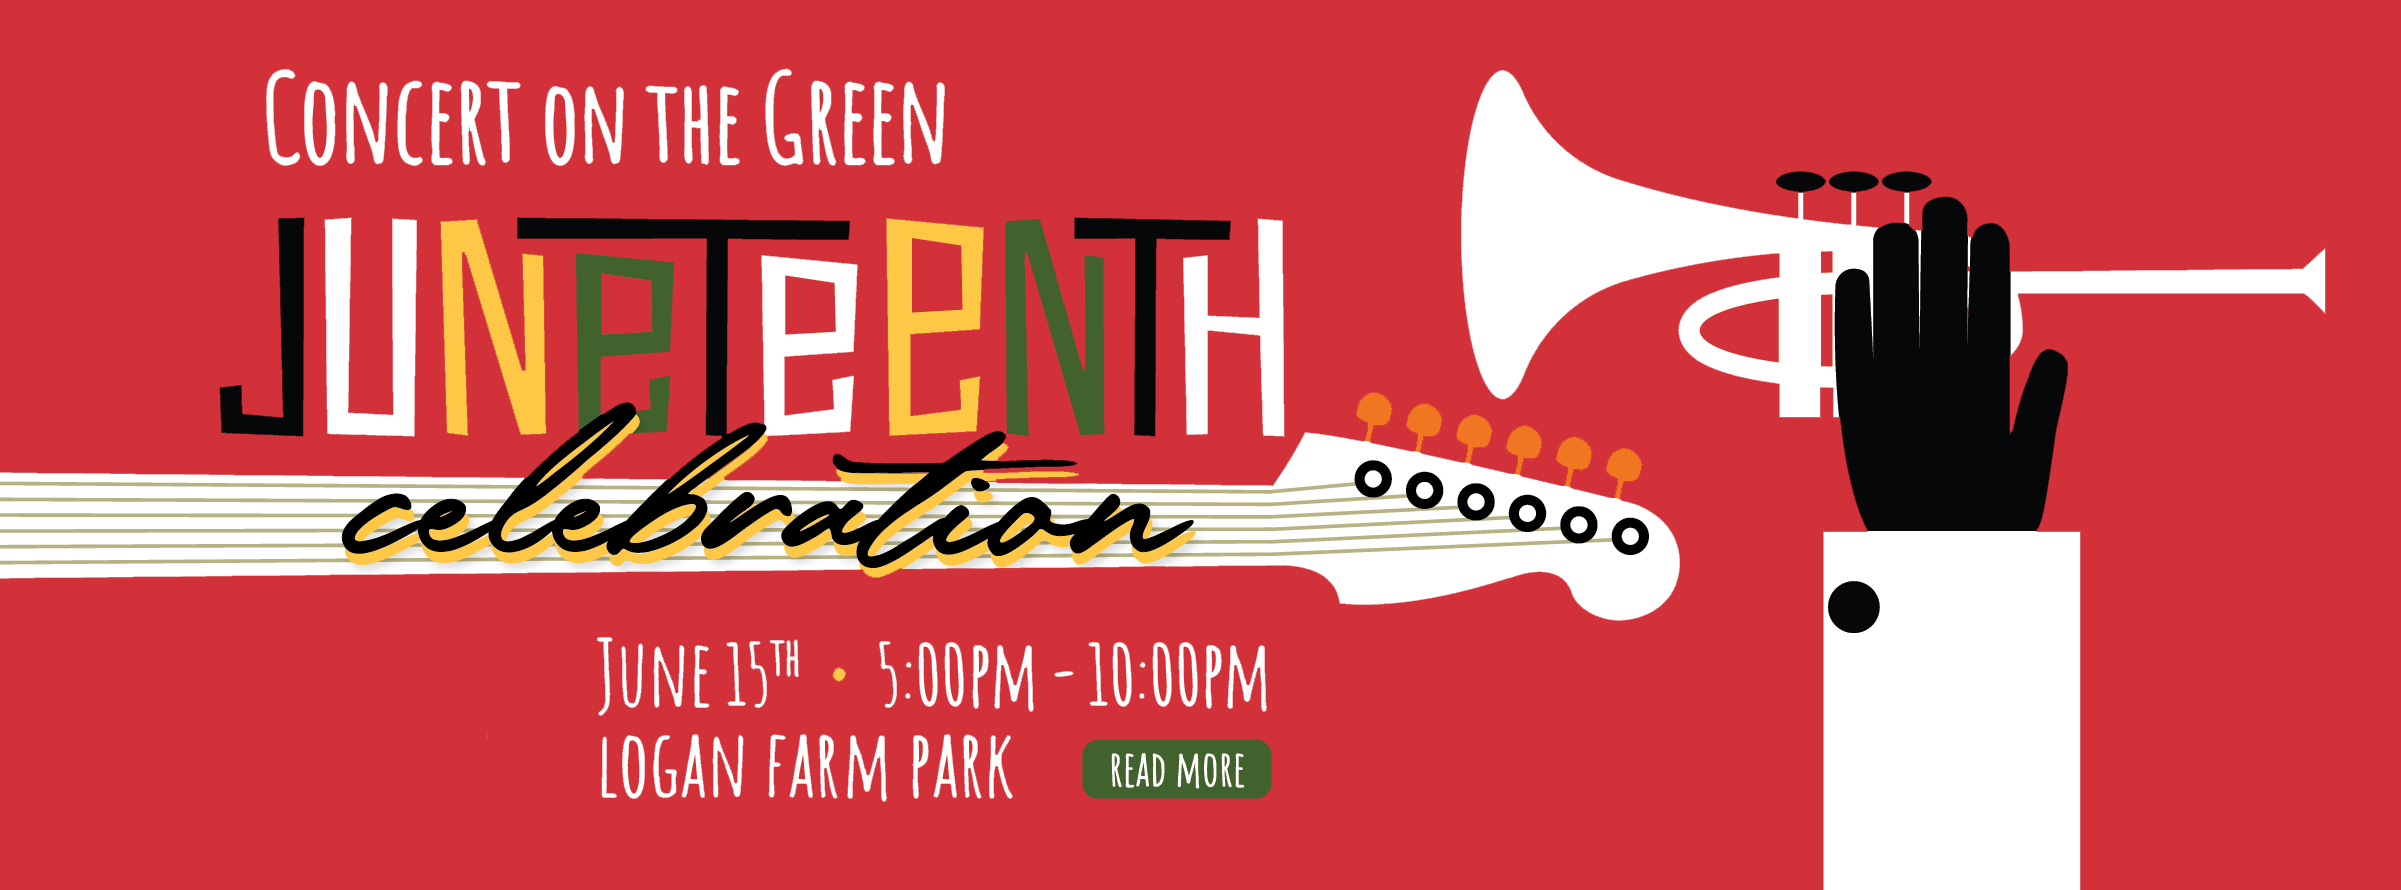 Image Visit Acworth Concert on the Green Juneteenth Celebration